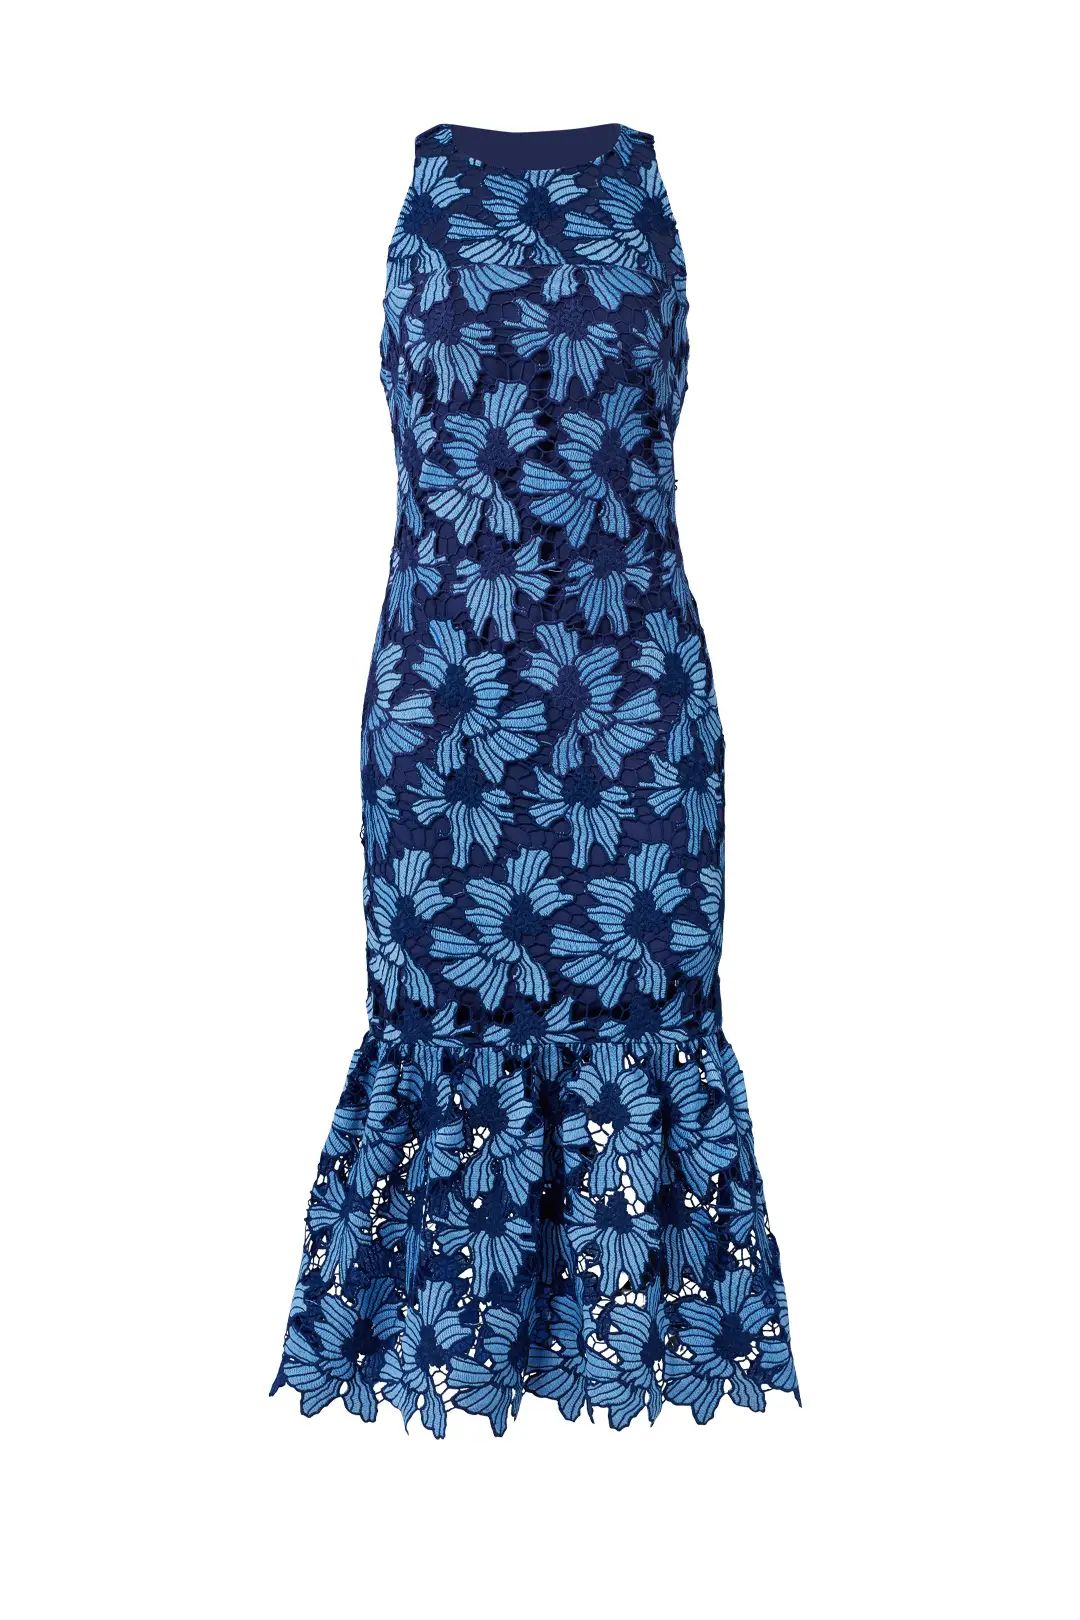 Shoshanna Blue Floral Bell Dress | Rent The Runway